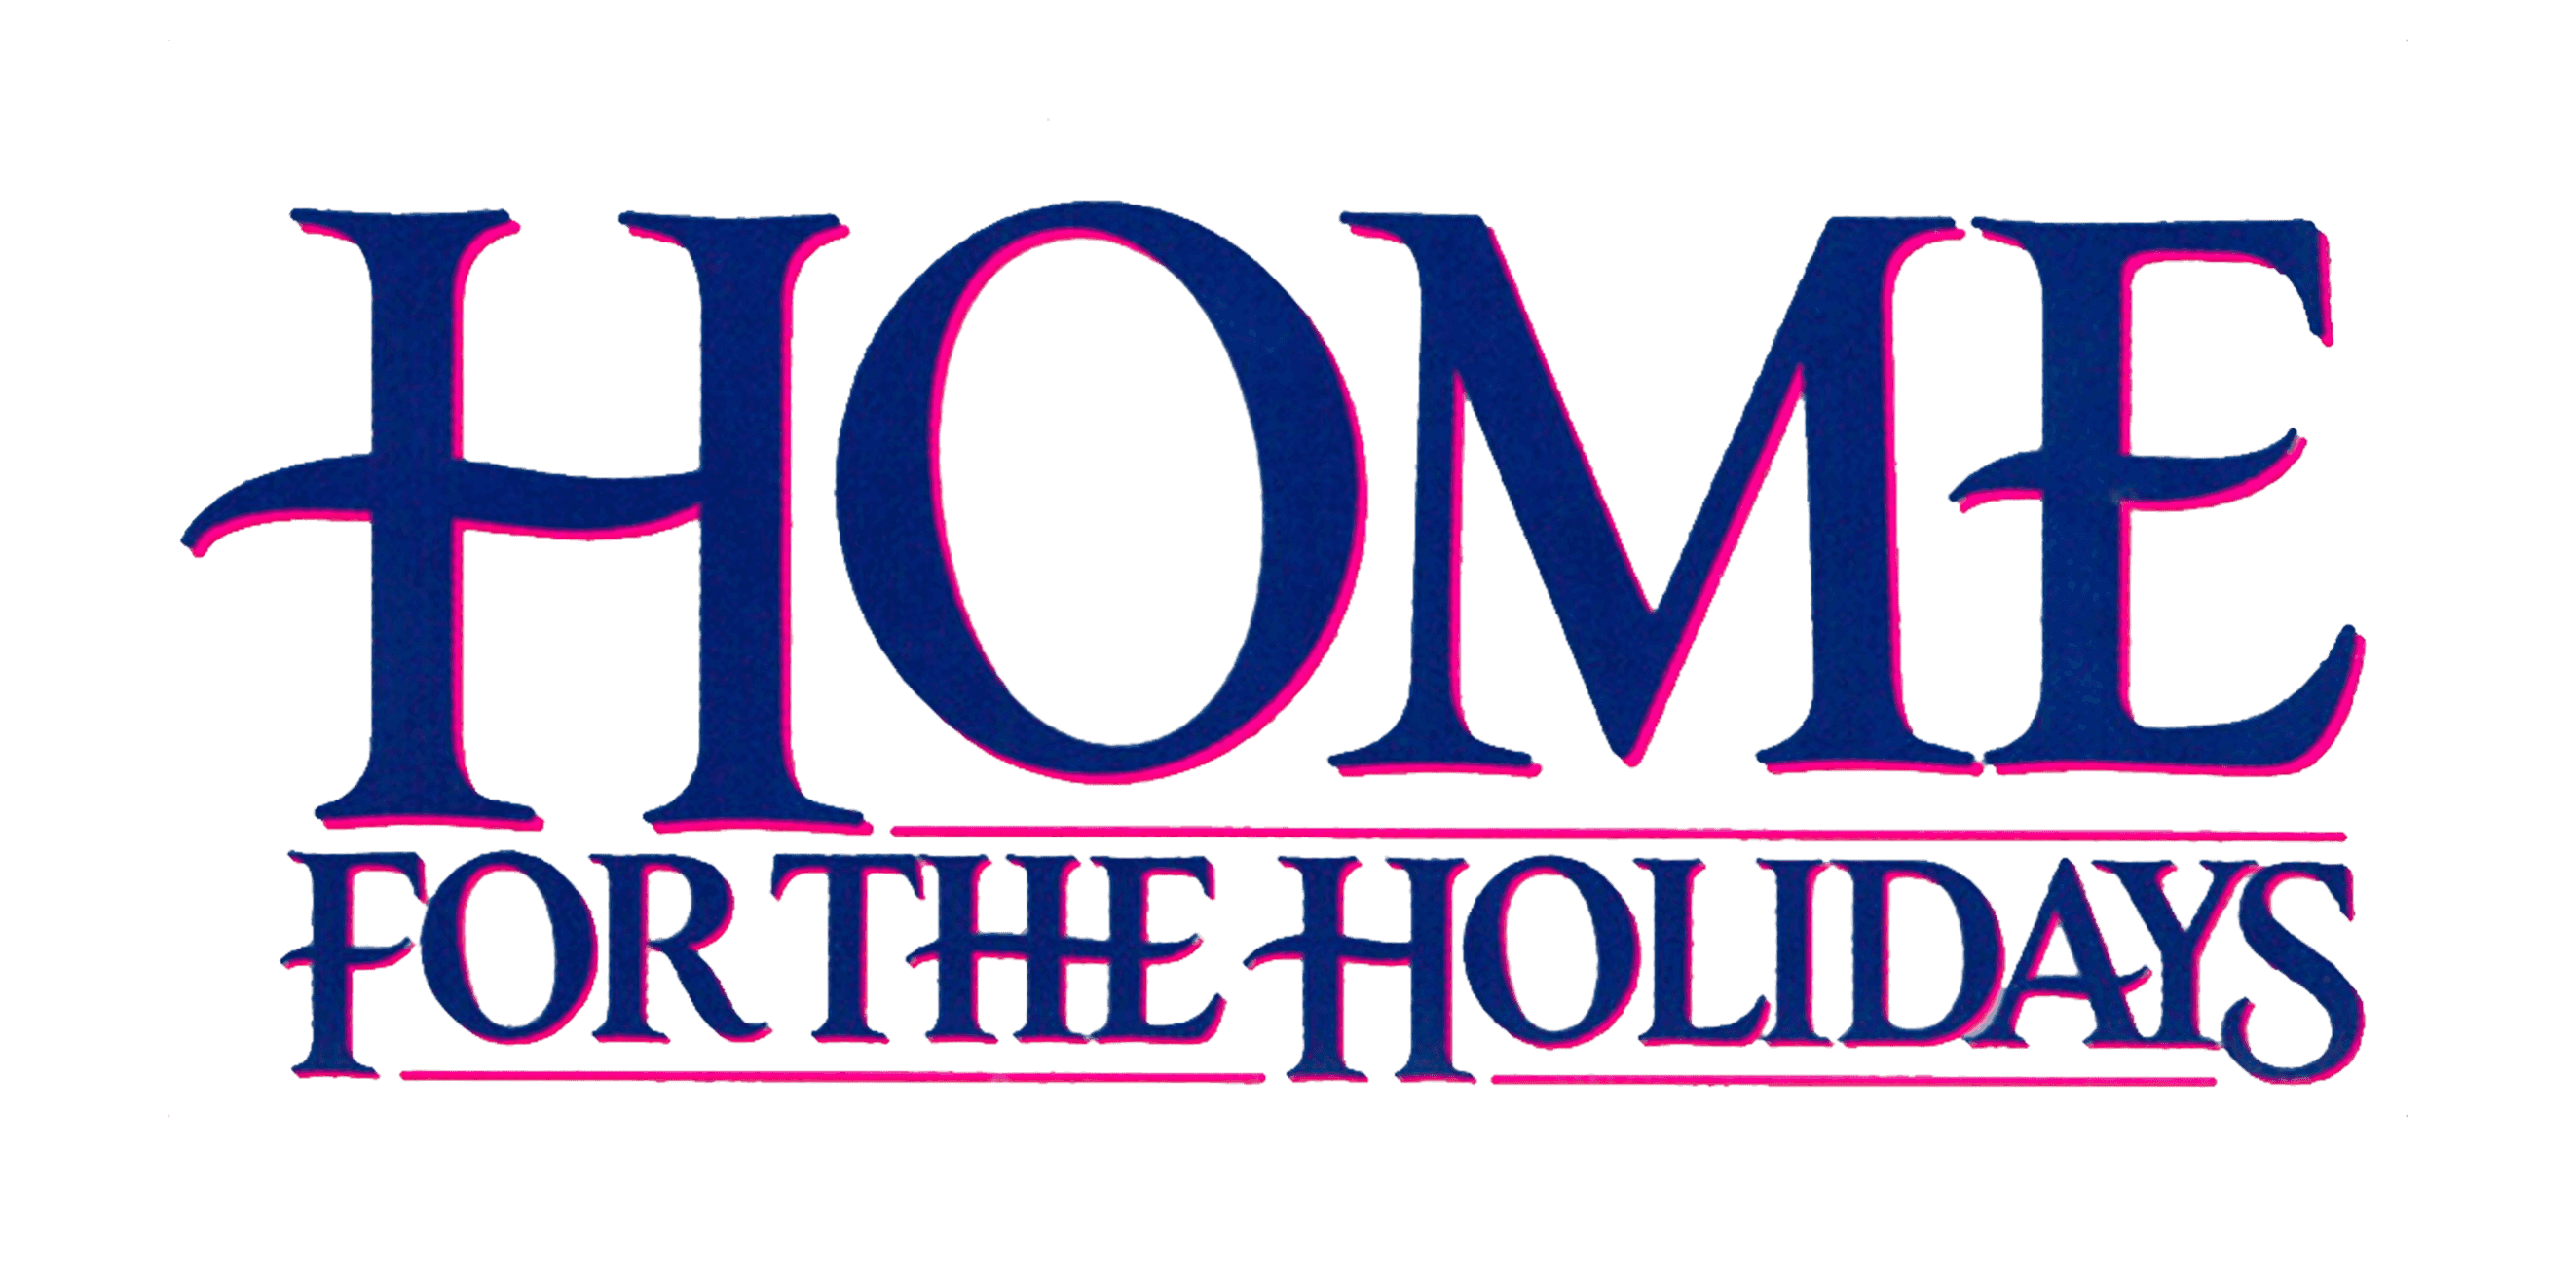 Home for the Holidays logo